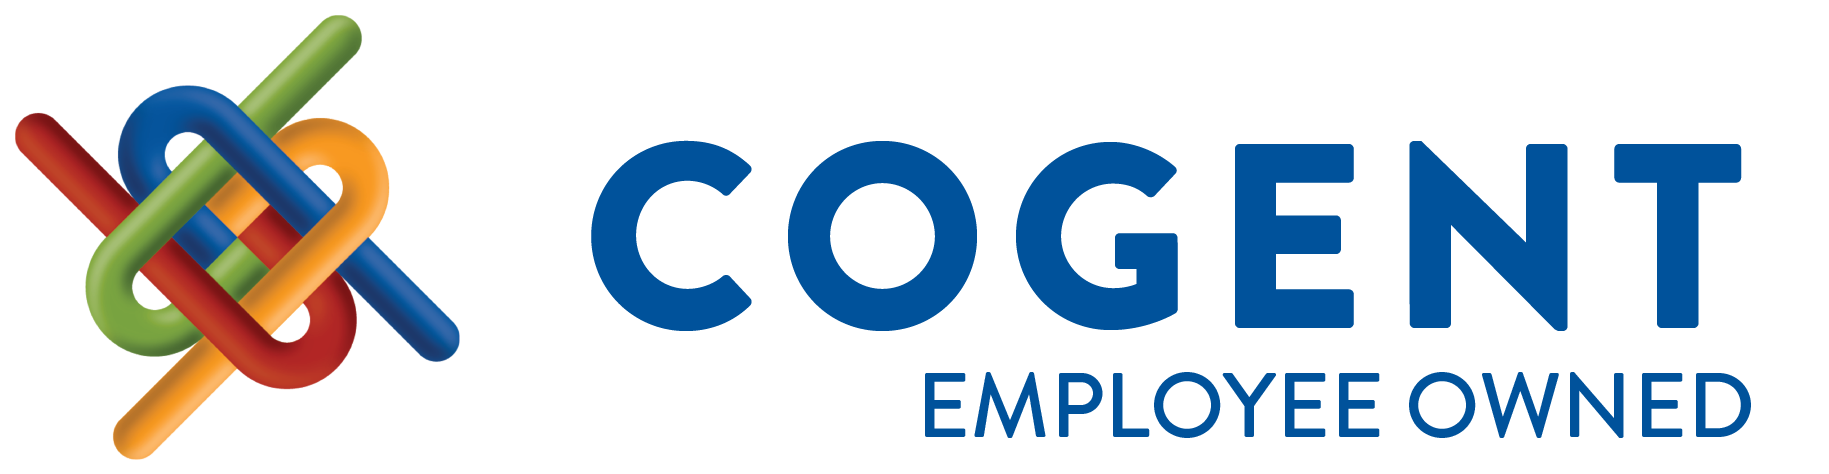 Cogent Companies